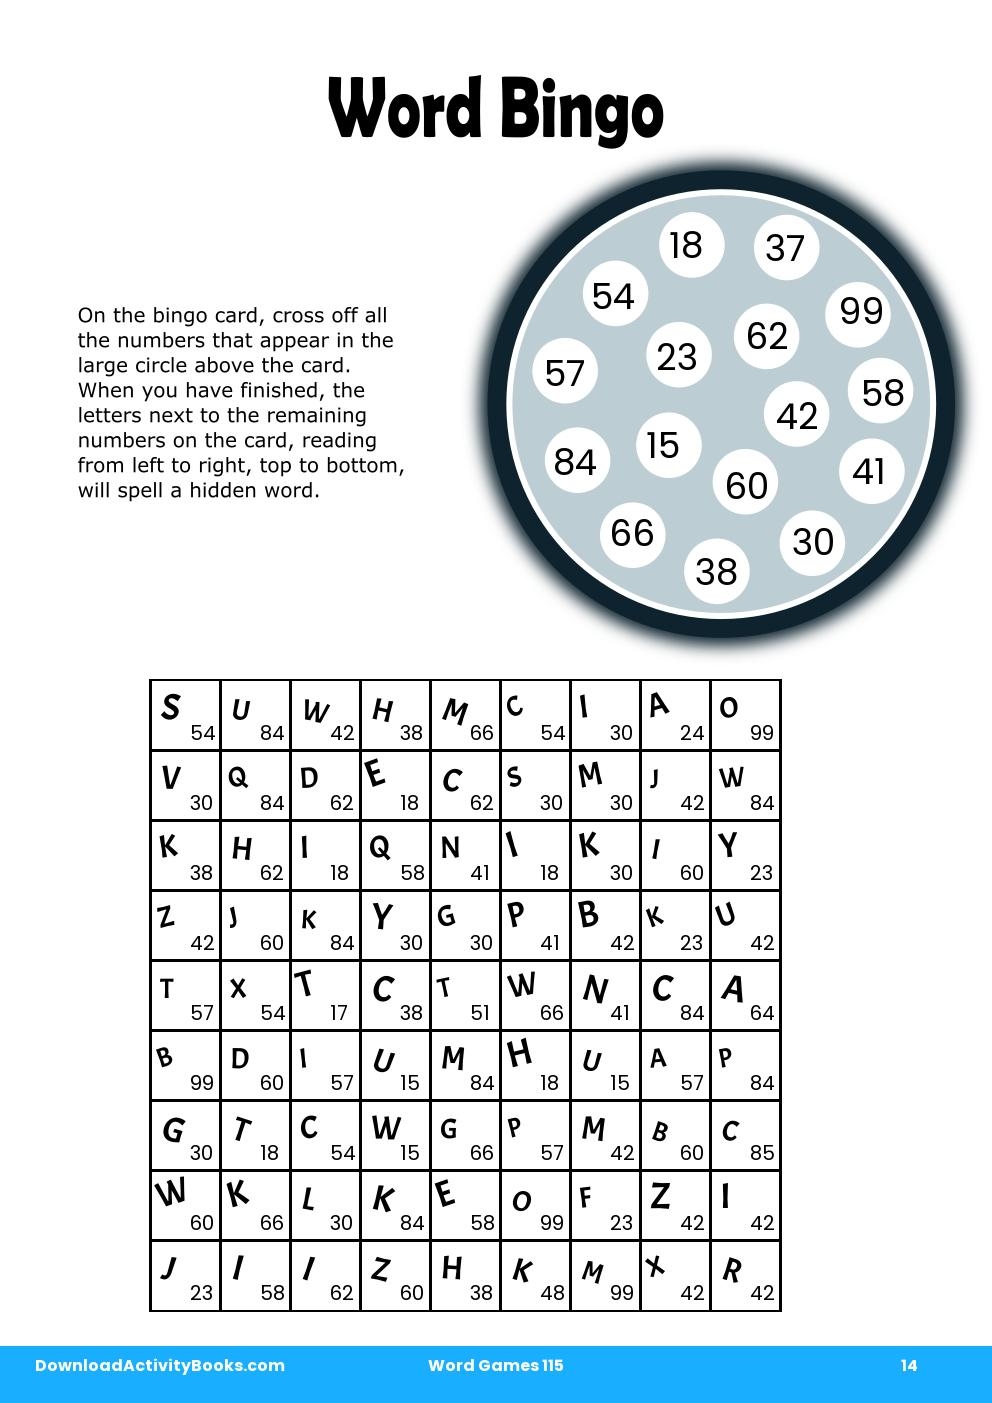 Word Bingo in Word Games 115